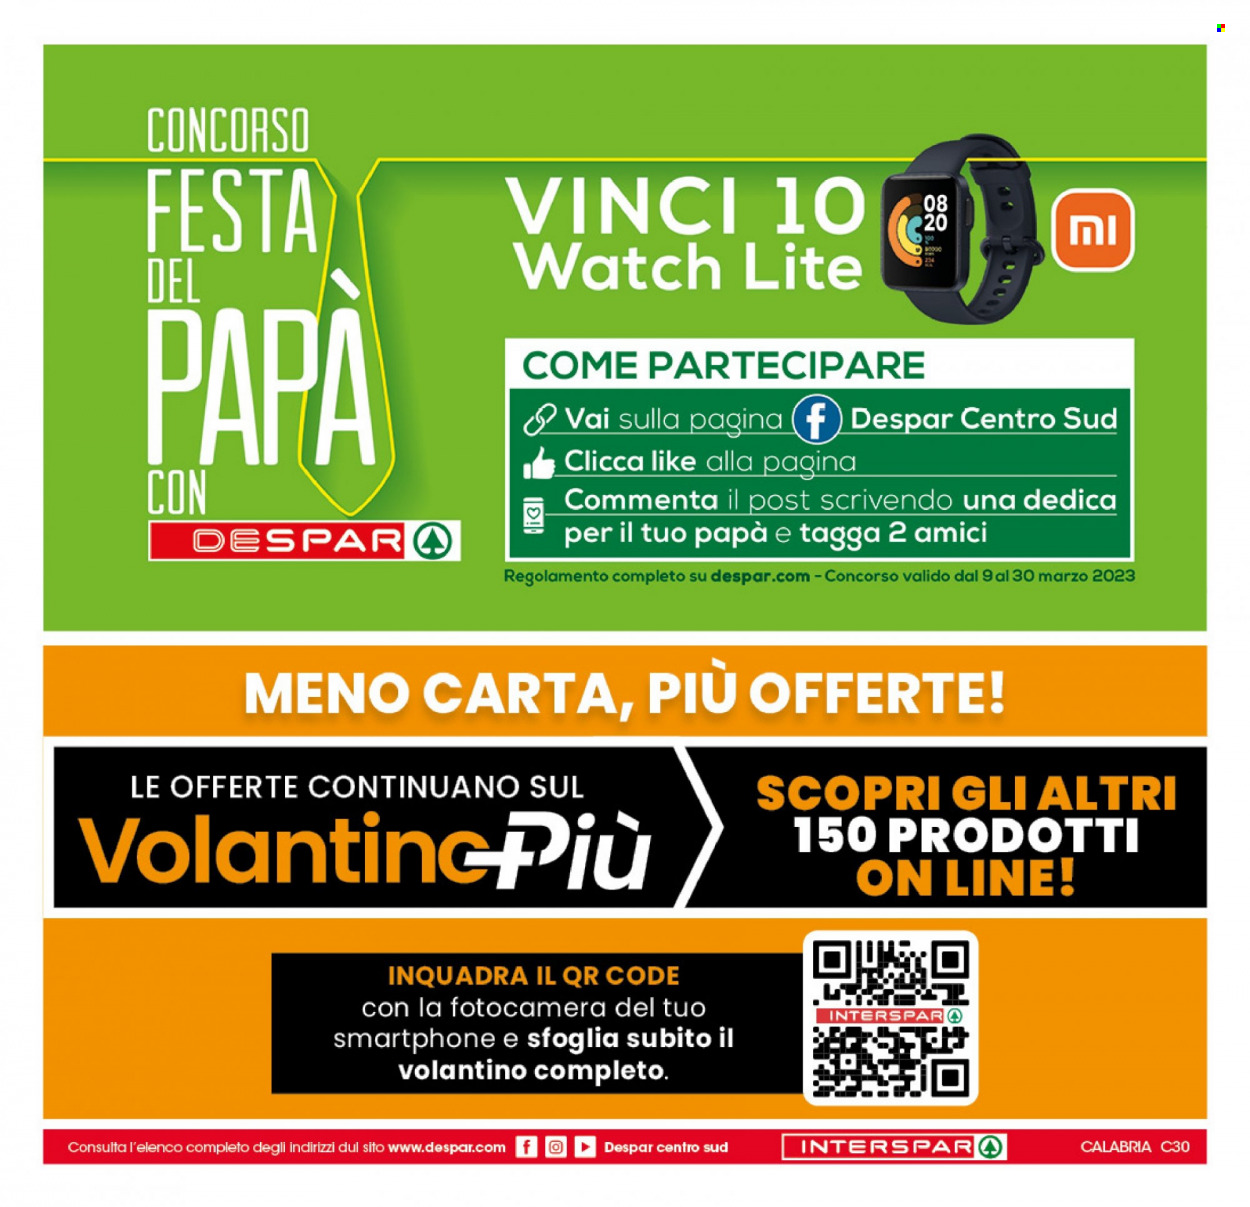 Volantino Interspar - 20.3.2023 - 29.3.2023.